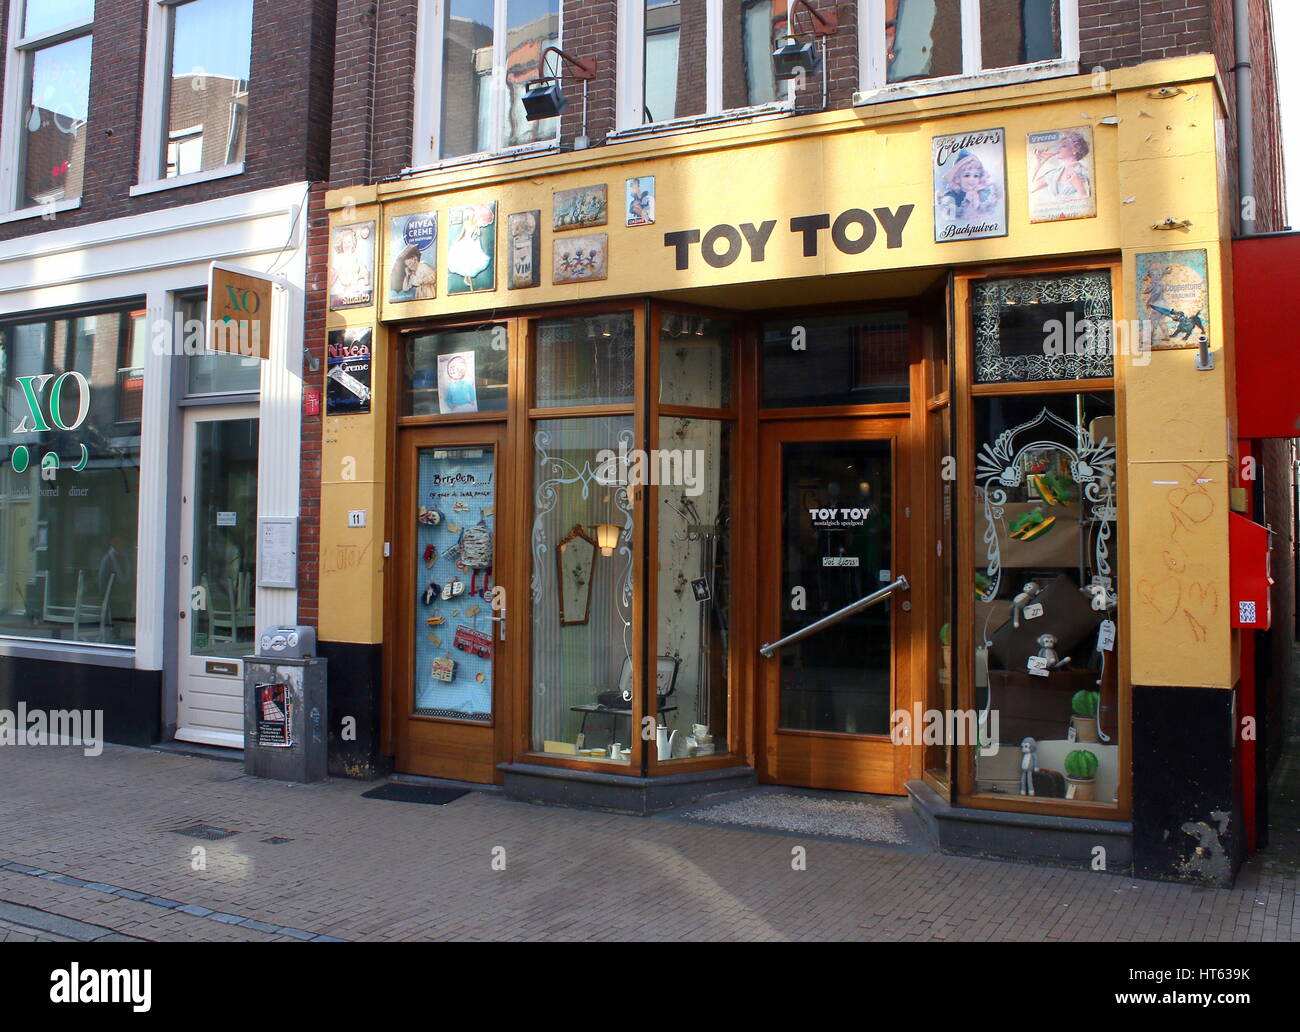 Folkingestraat, la rinomata via dello shopping nel centro di Groningen nei Paesi Bassi. Toy Toy nostalgico toyshop vintage Foto Stock